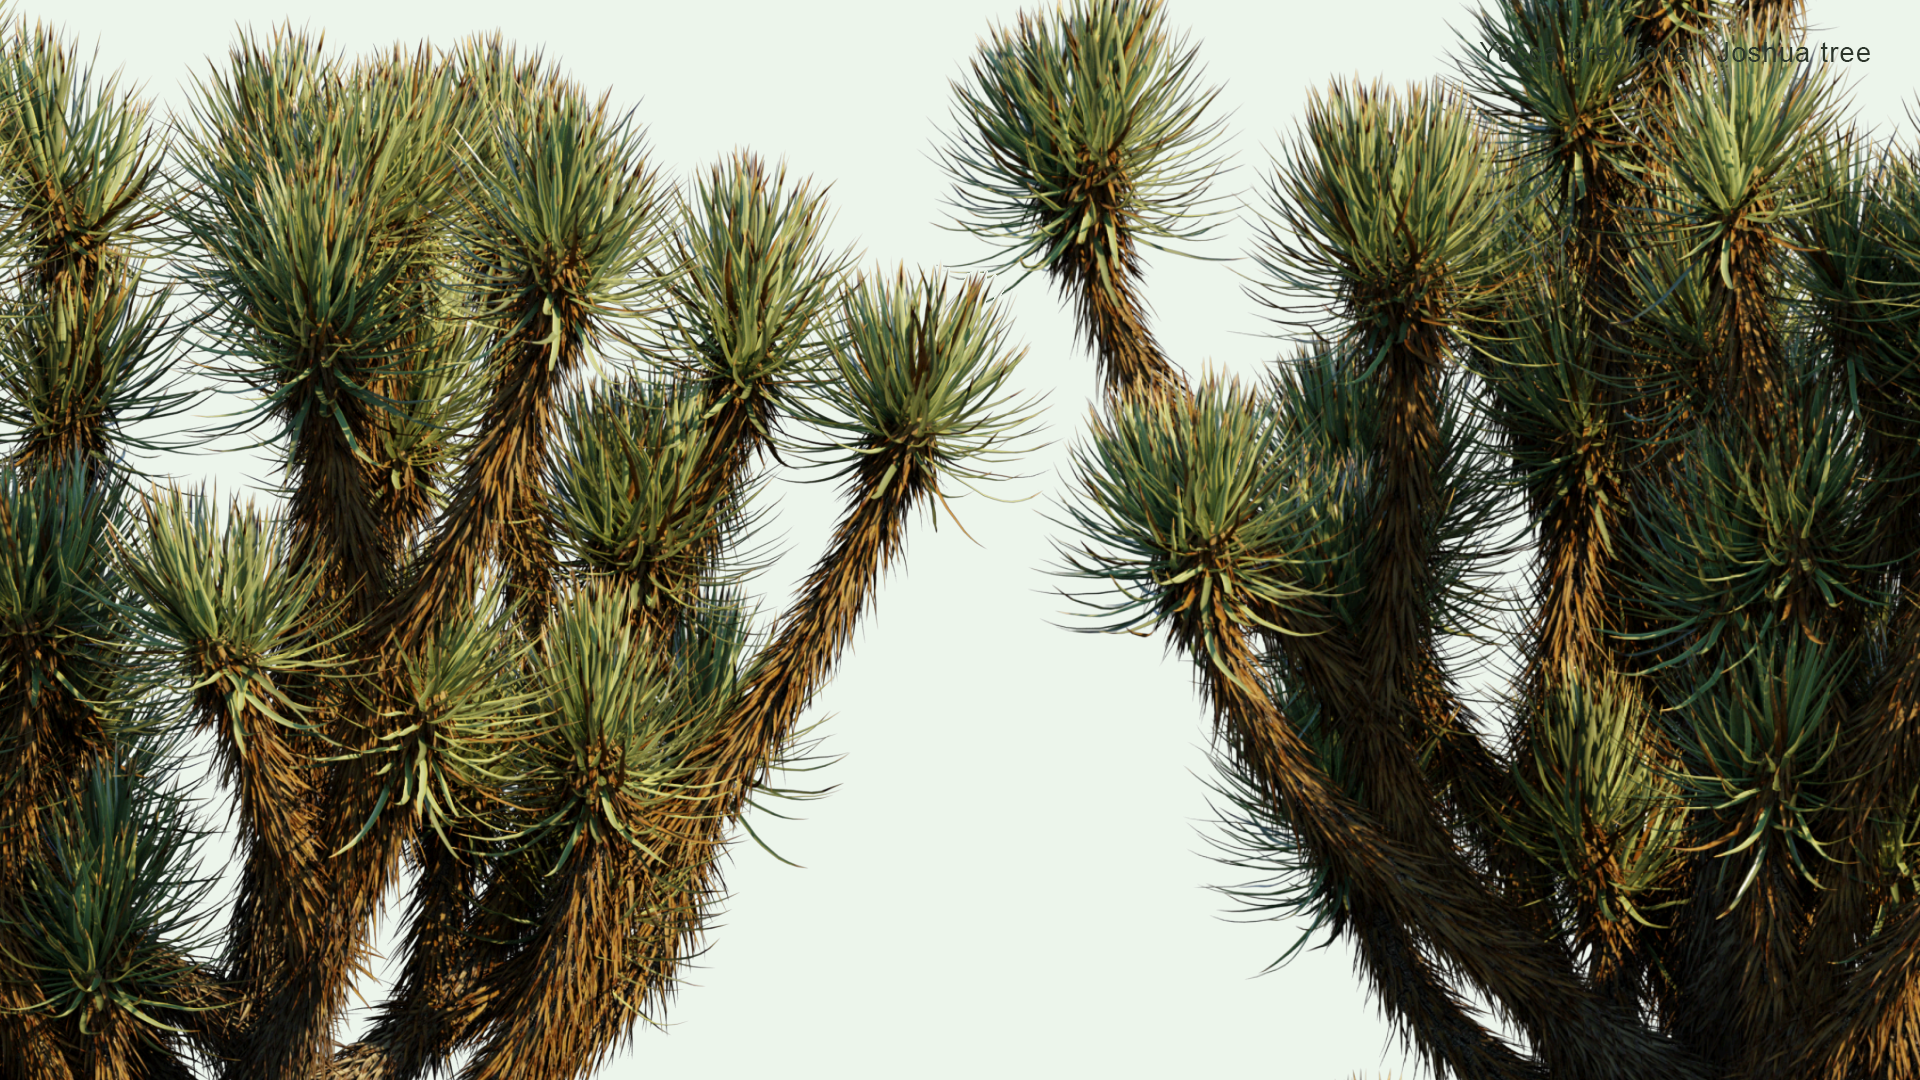 2D Yucca Brevifolia - Joshua Tree